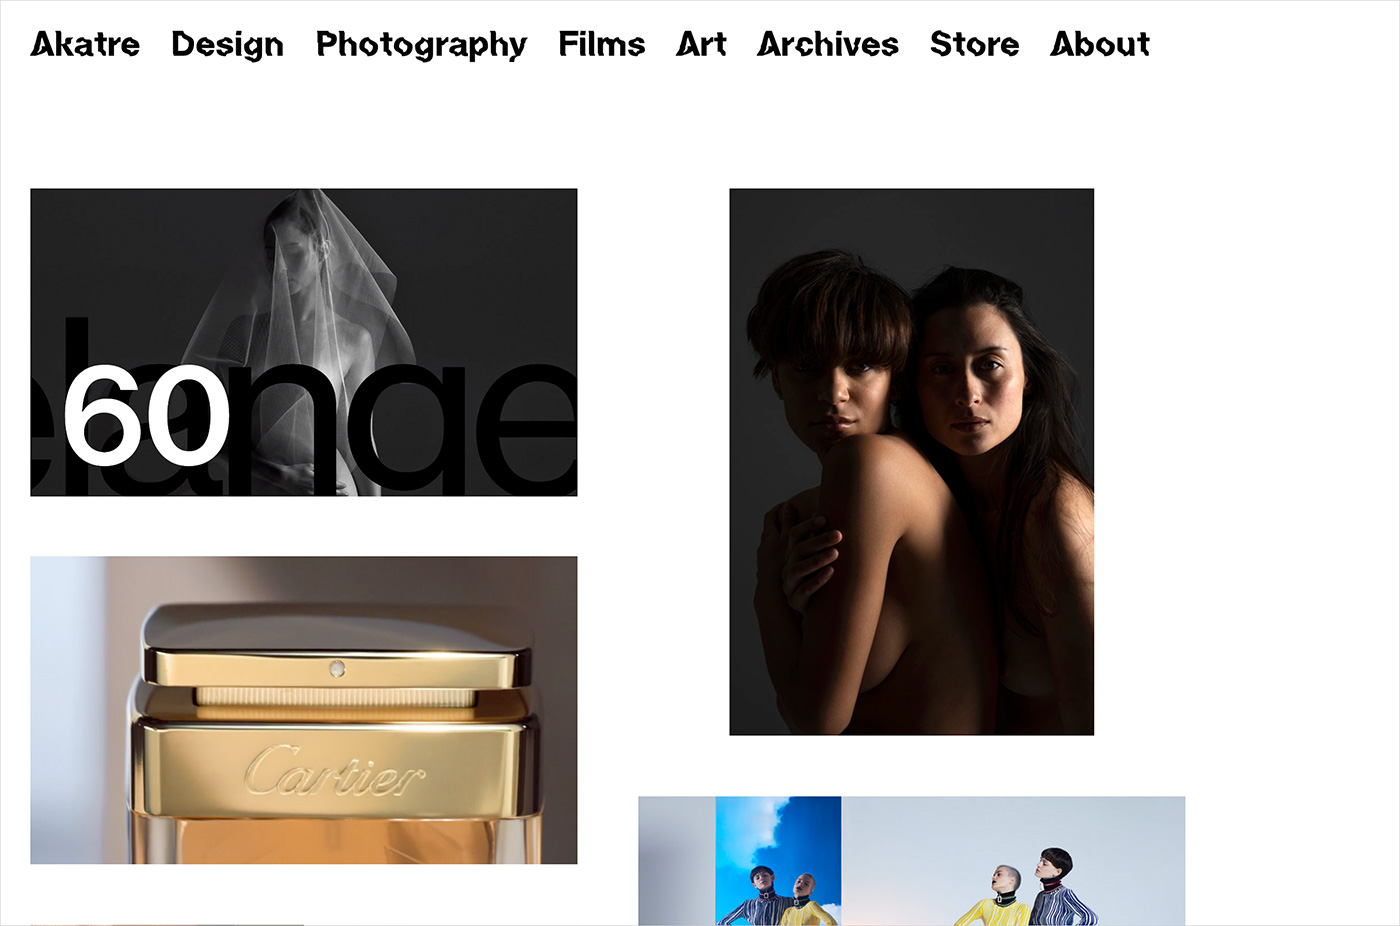 Akatre Creative Studioウェブサイトの画面キャプチャ画像